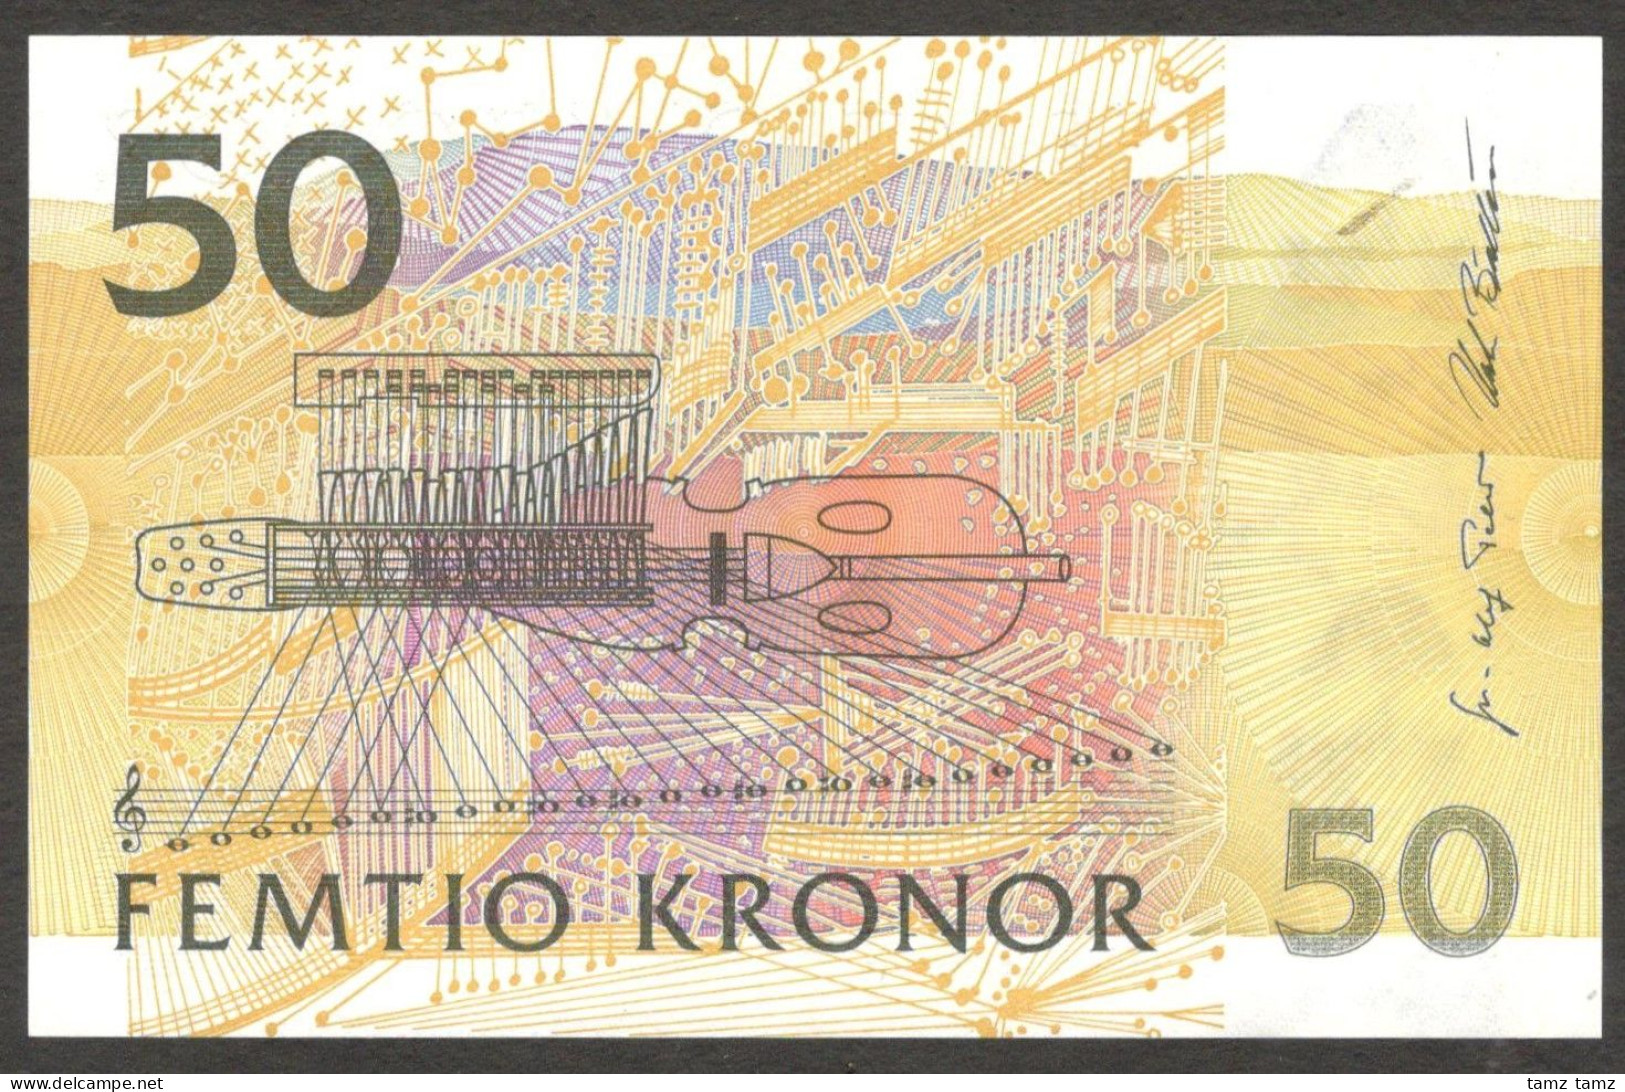 Sweden 50 Kronor Jenny Lind 1996 UNC Beautiful Banknotes - Schweden